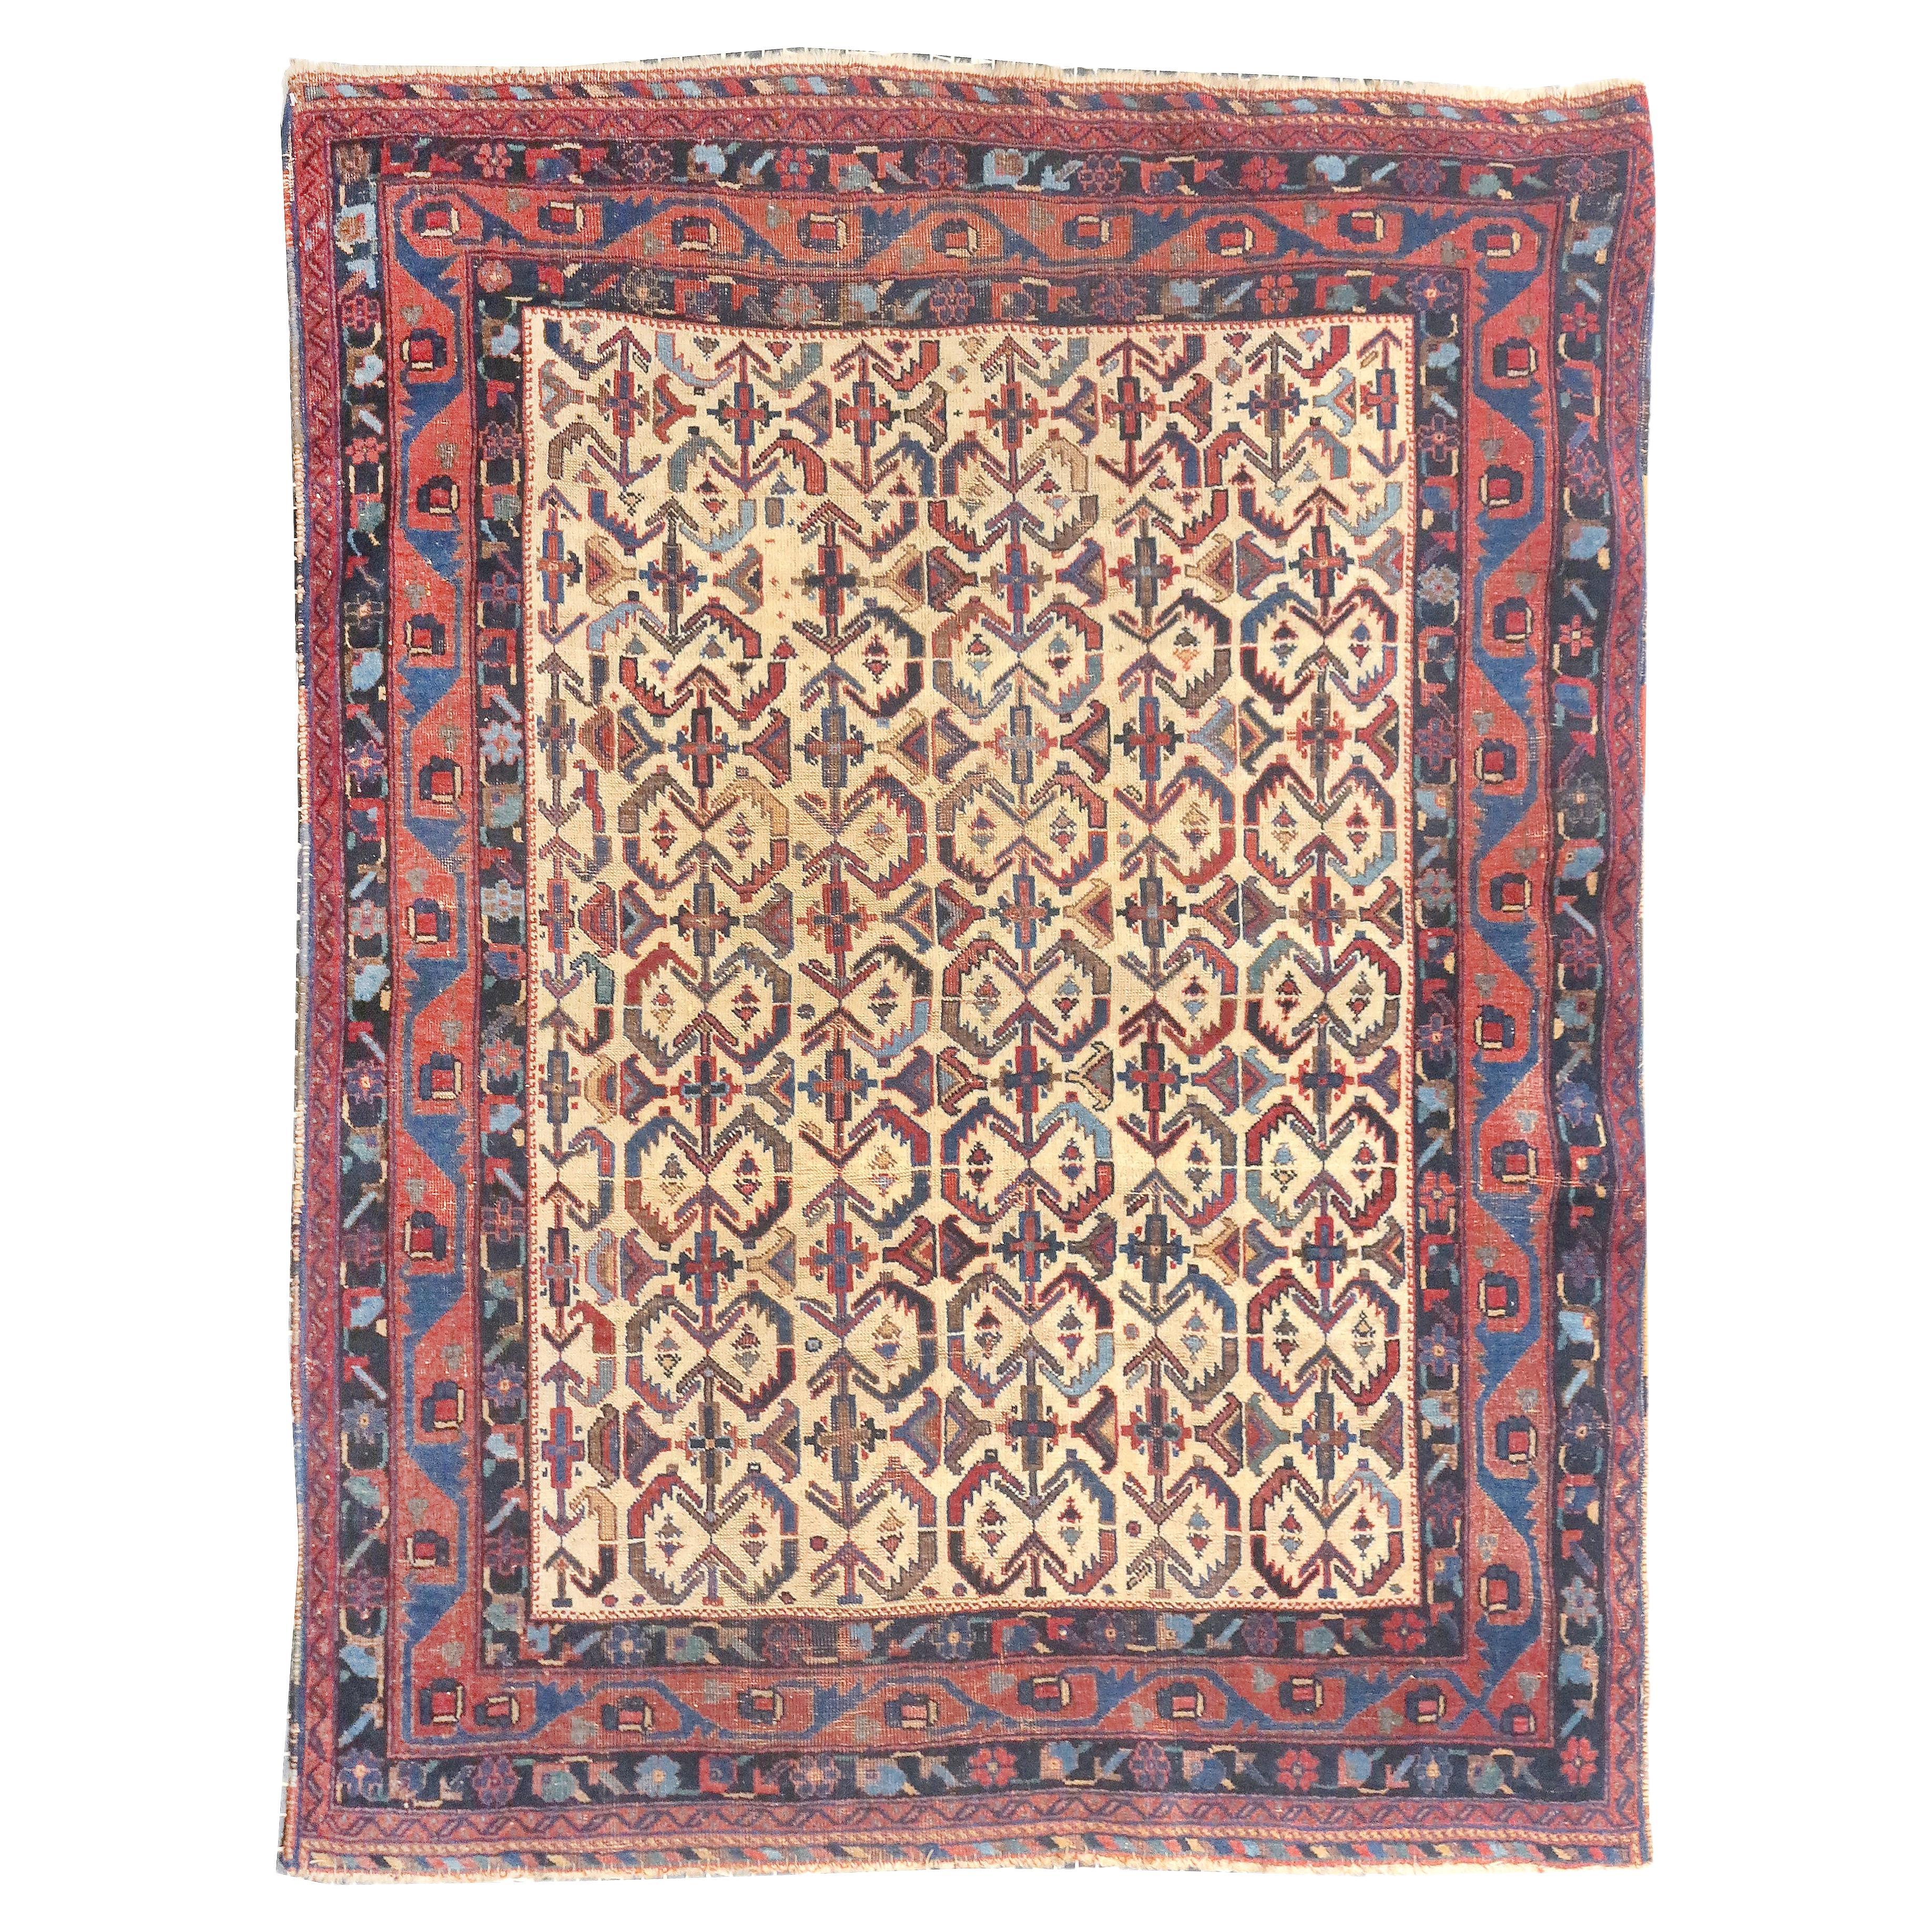 Antique Persian Tribal Afshar Rug